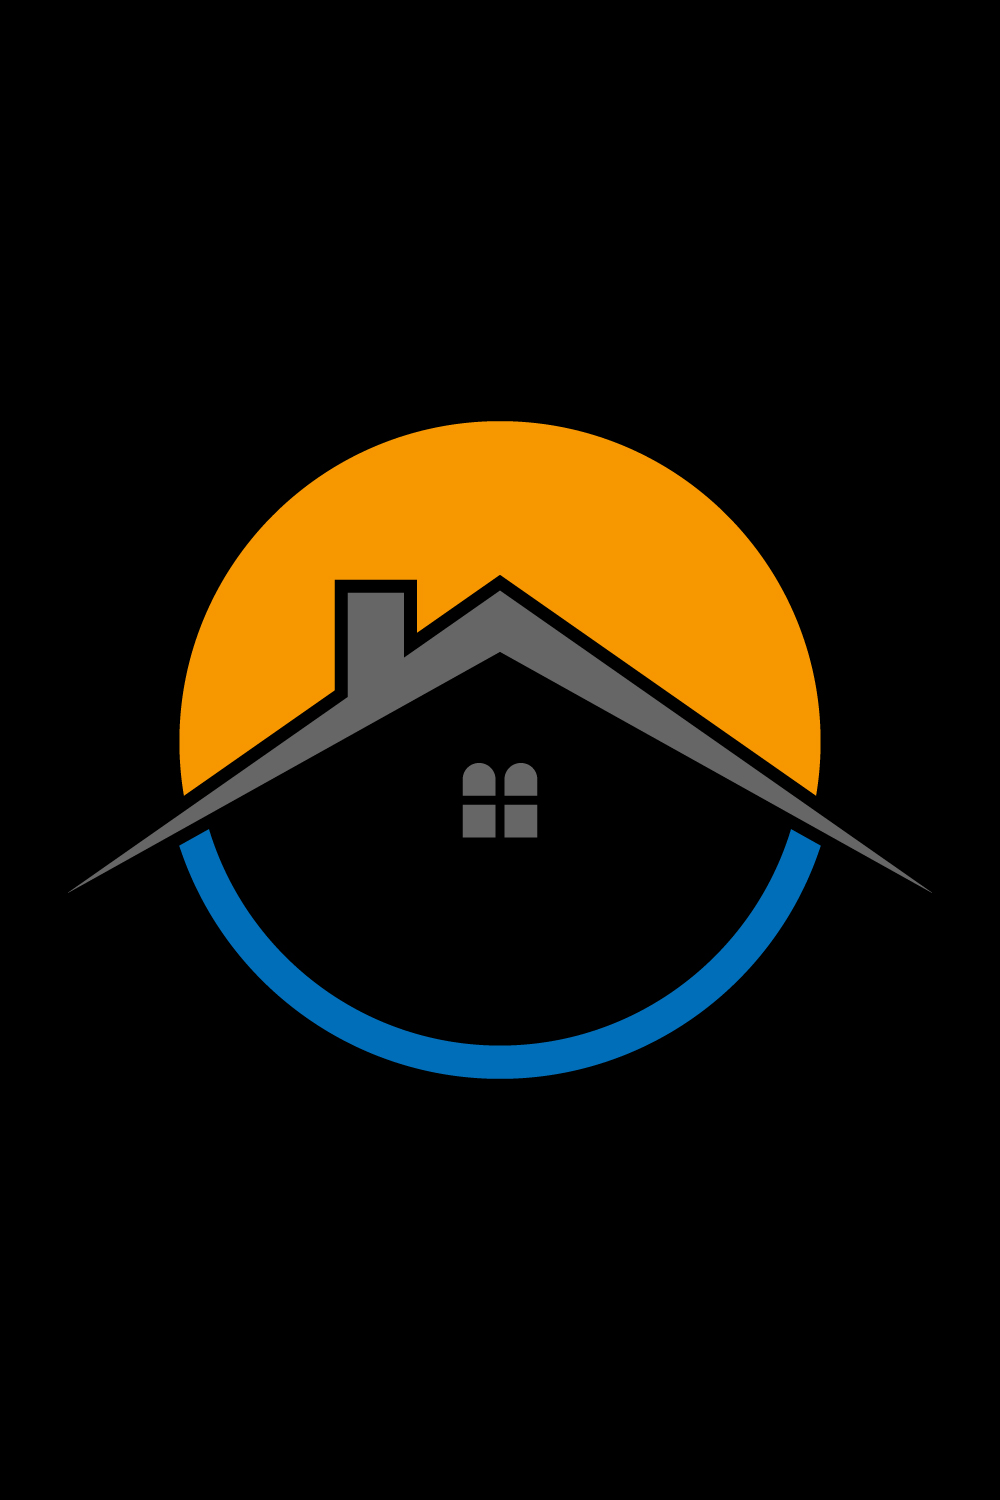 Real estate house logo design, Vector design template pinterest preview image.